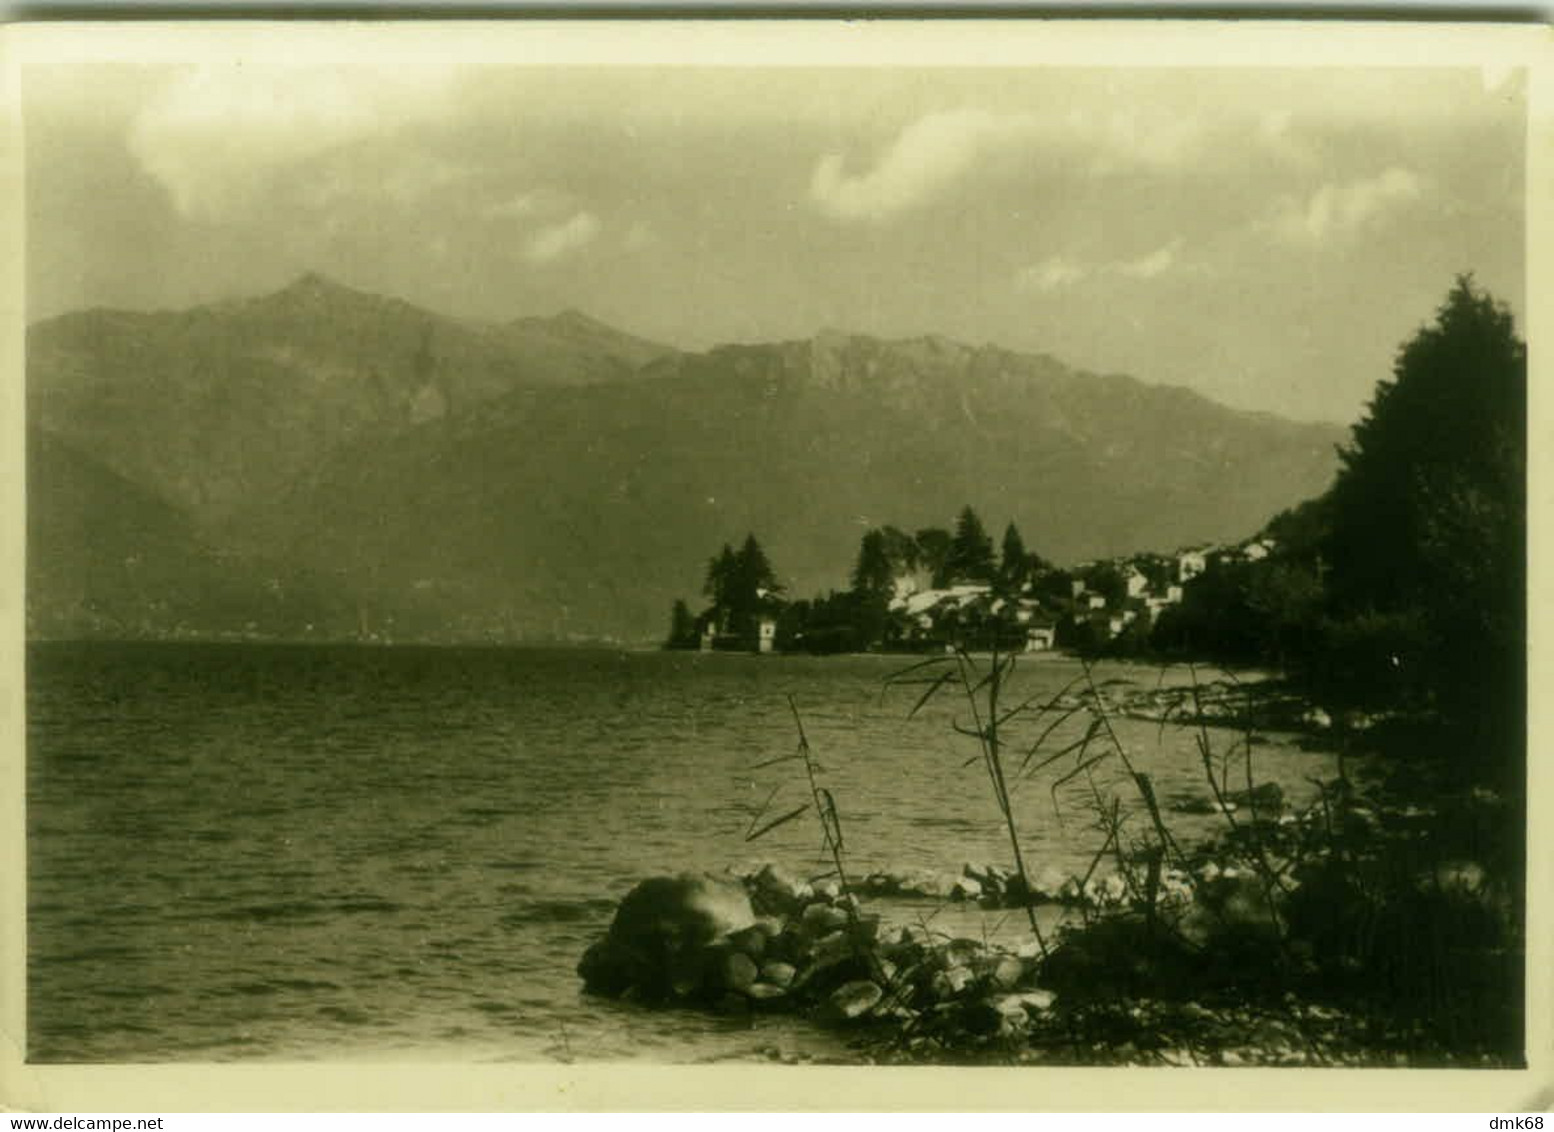 SWITZERLAND - GERRA GAMAROGNO ( TICINO ) EDIZIONE A. SCHNAUDER  - 1930s  (12002) - Cugnasco-Gerra